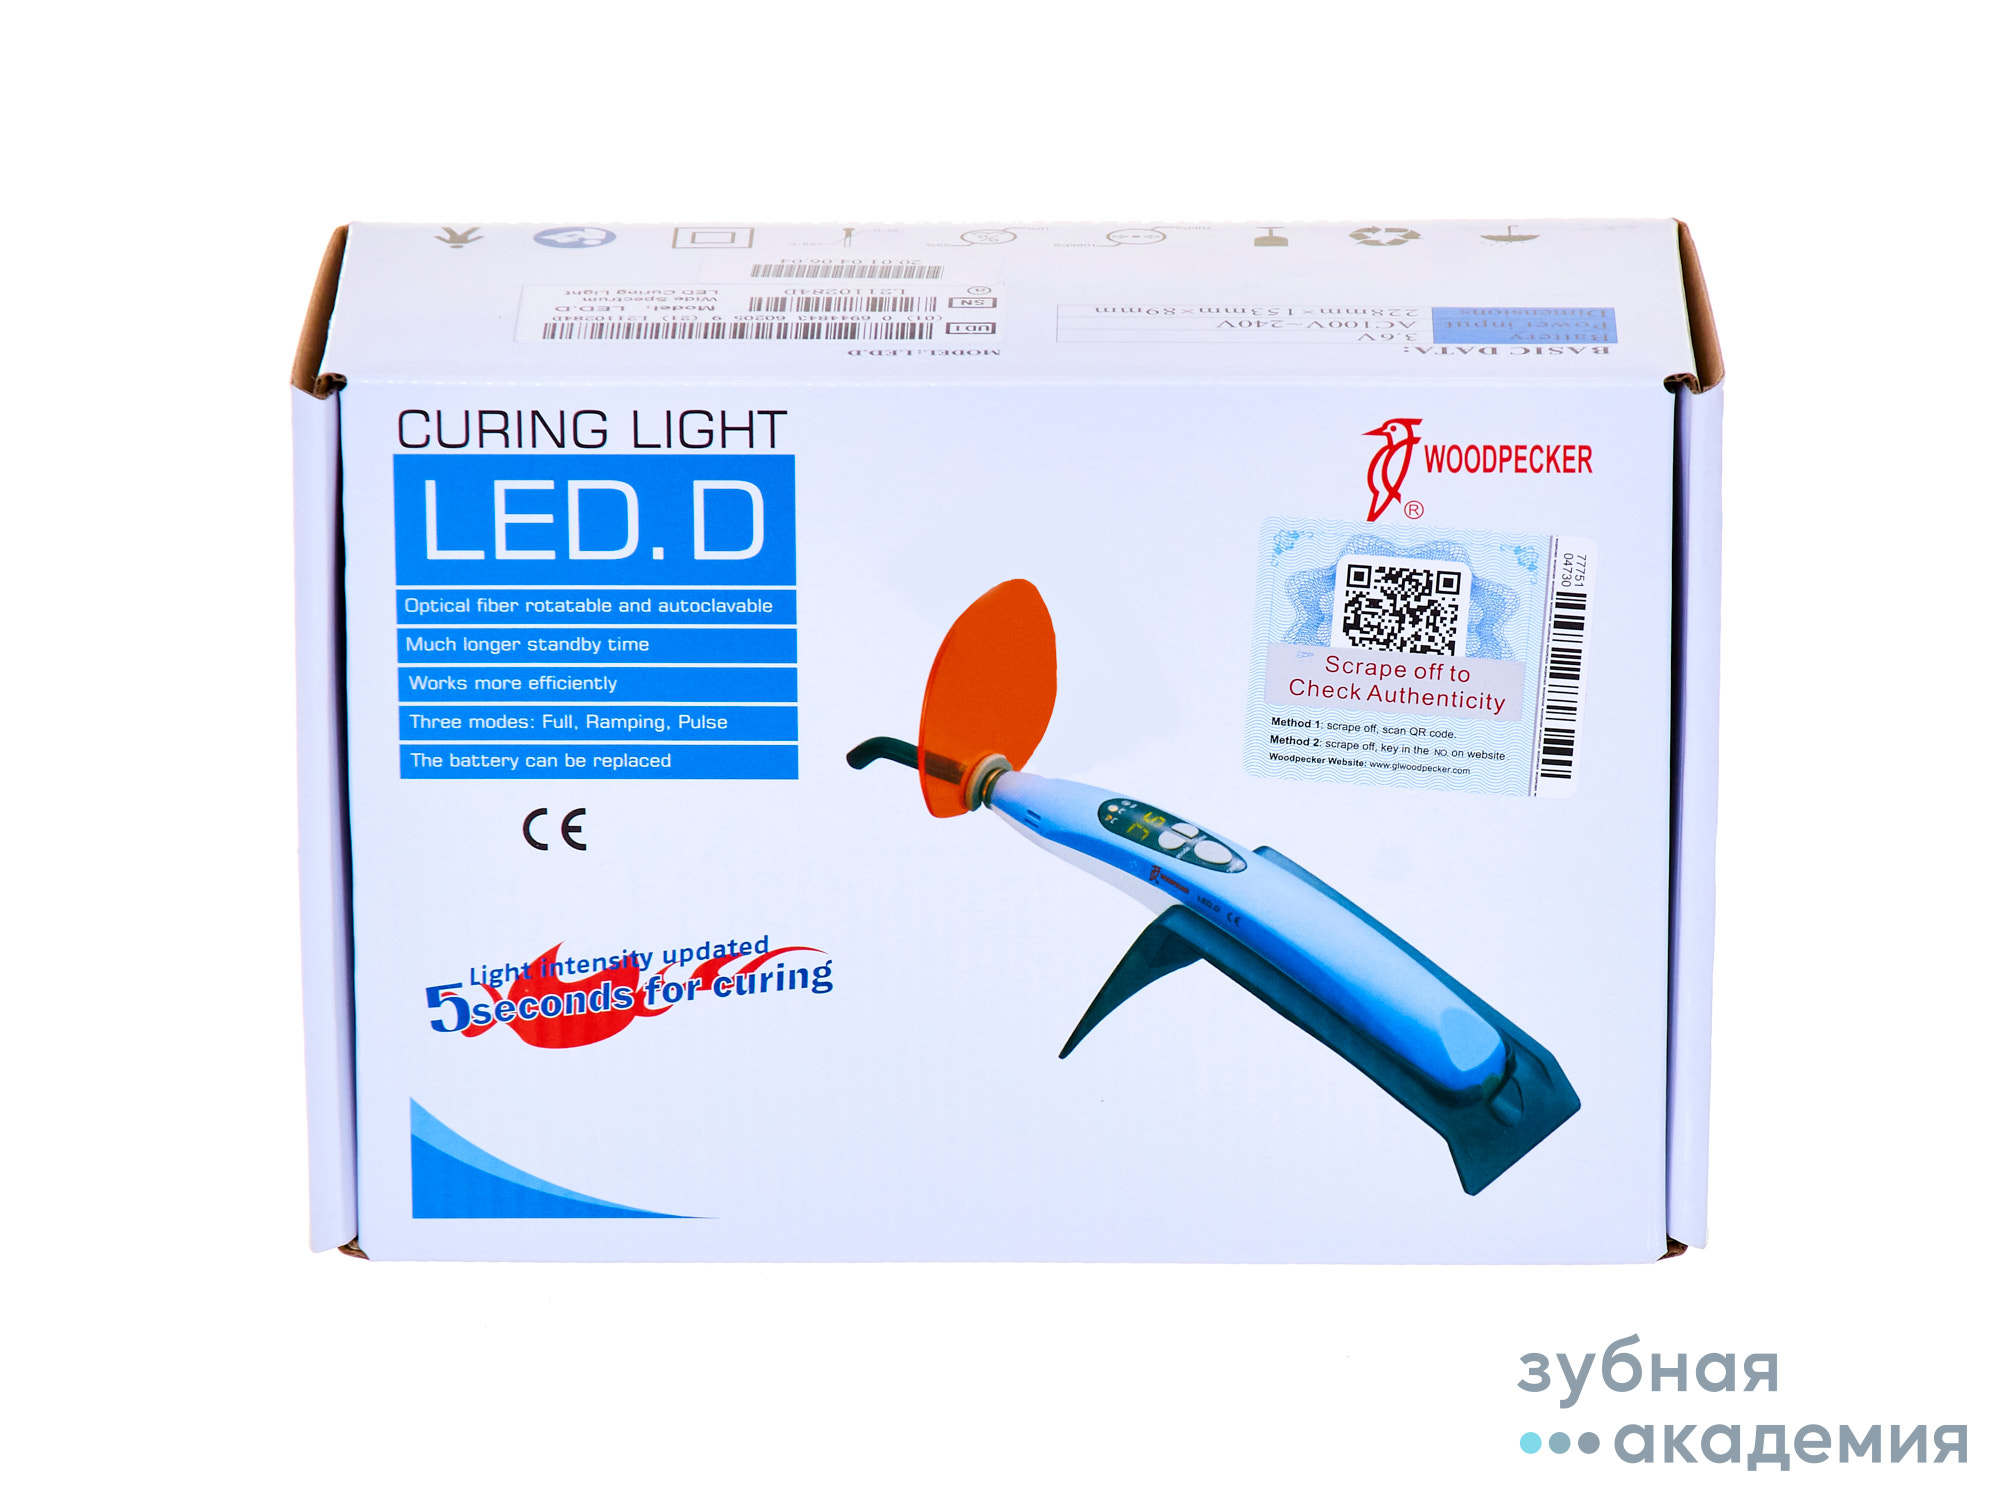 Лампа полимеризационная "WOODPECKER" LED, D /WOODPECKER/ Китай